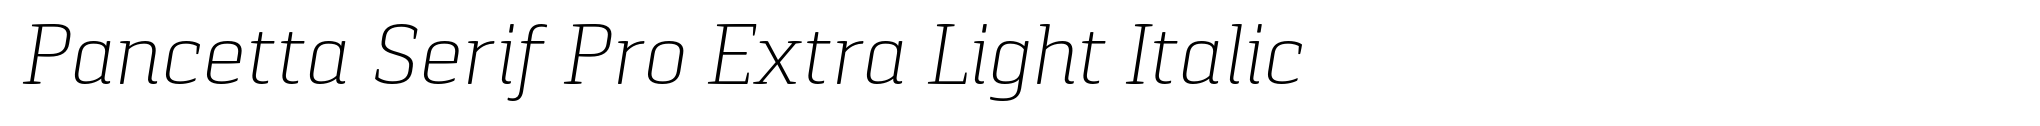 Pancetta Serif Pro Extra Light Italic image